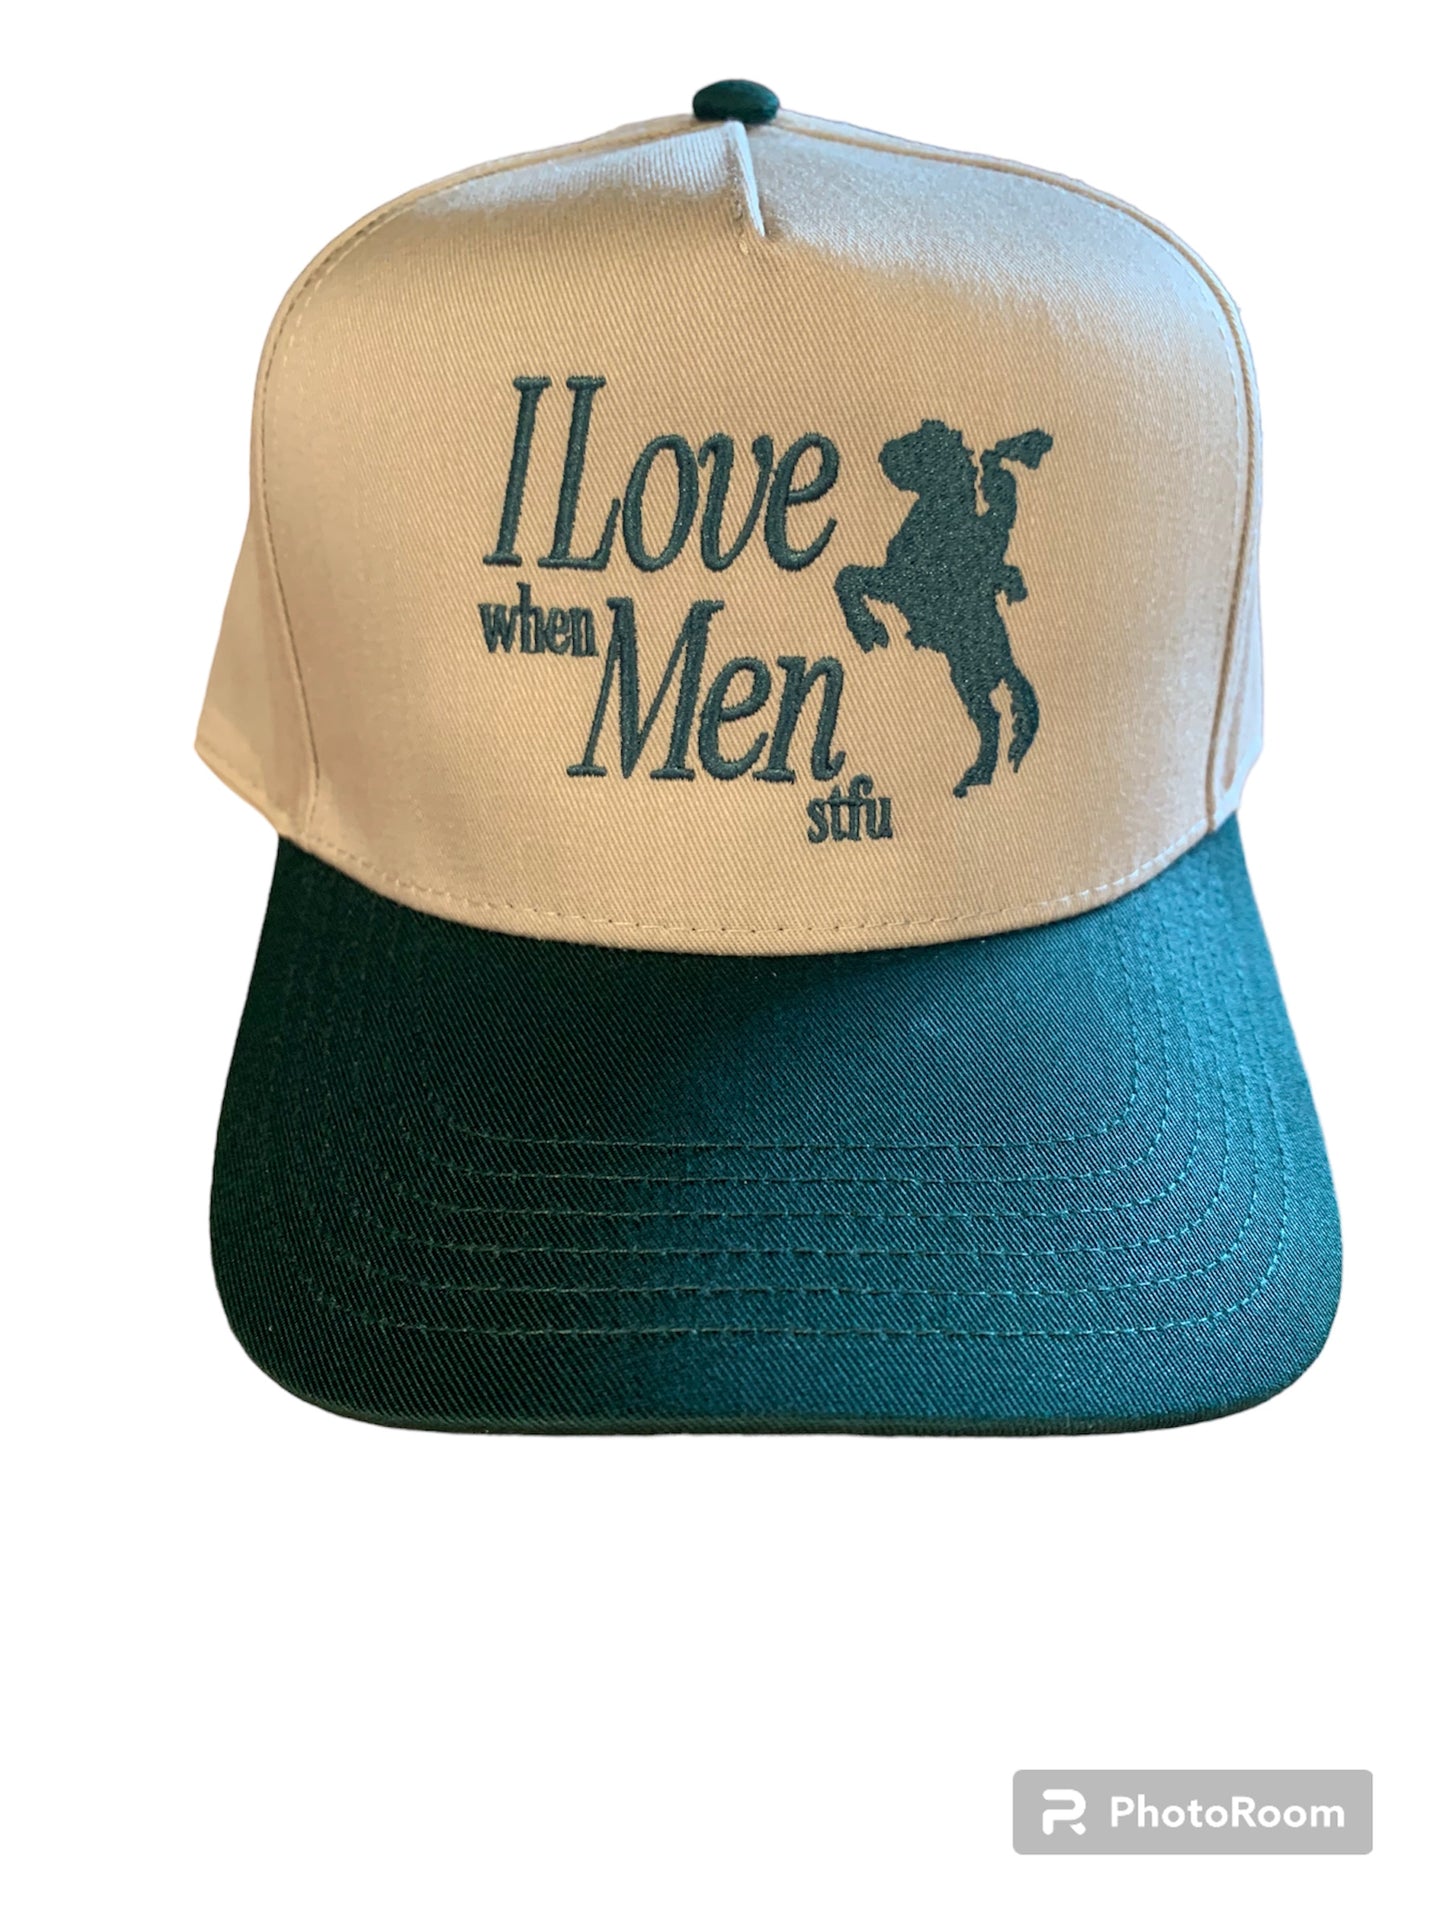 I Love When Men Stfu Trucker Hat